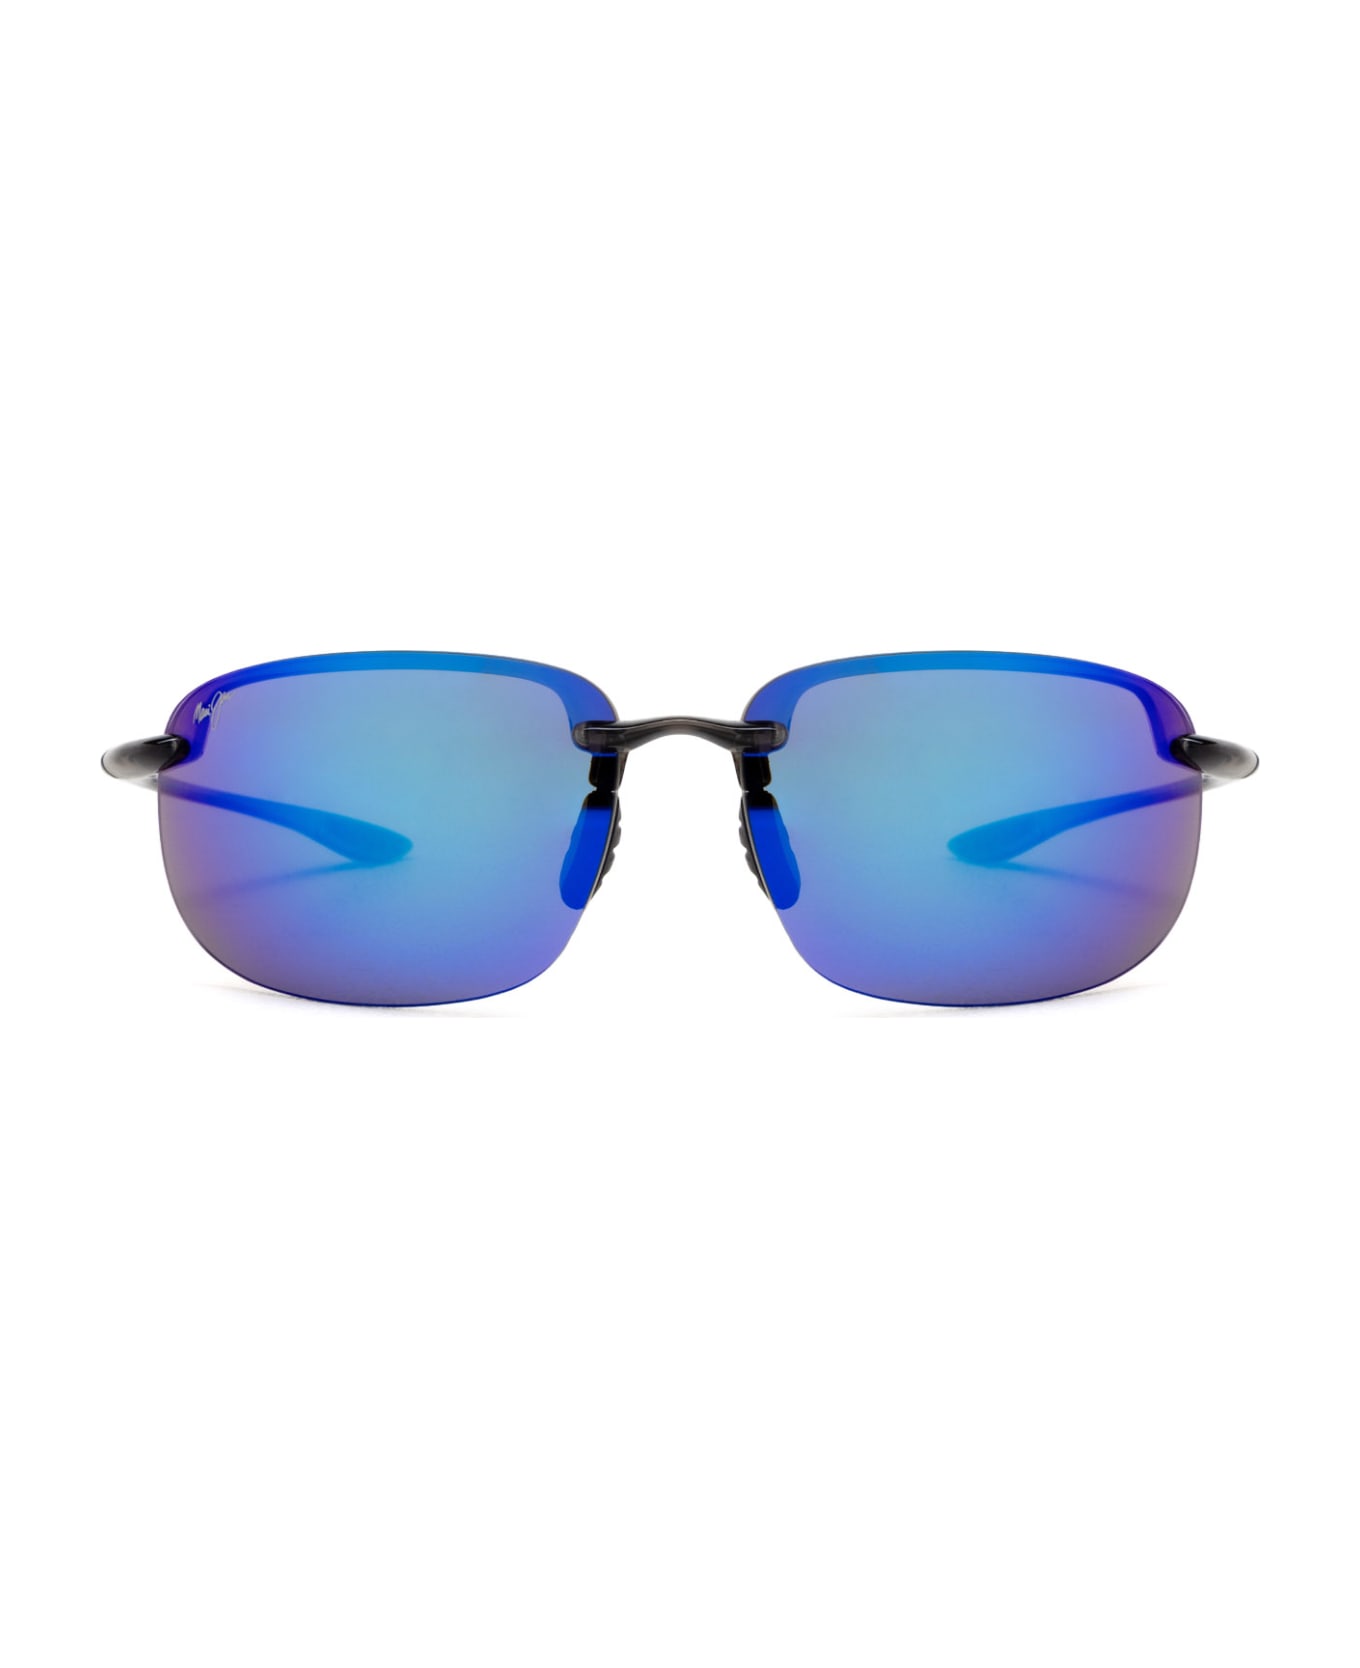 Maui Jim Mj456 Translucent Grey Sunglasses - Translucent Grey